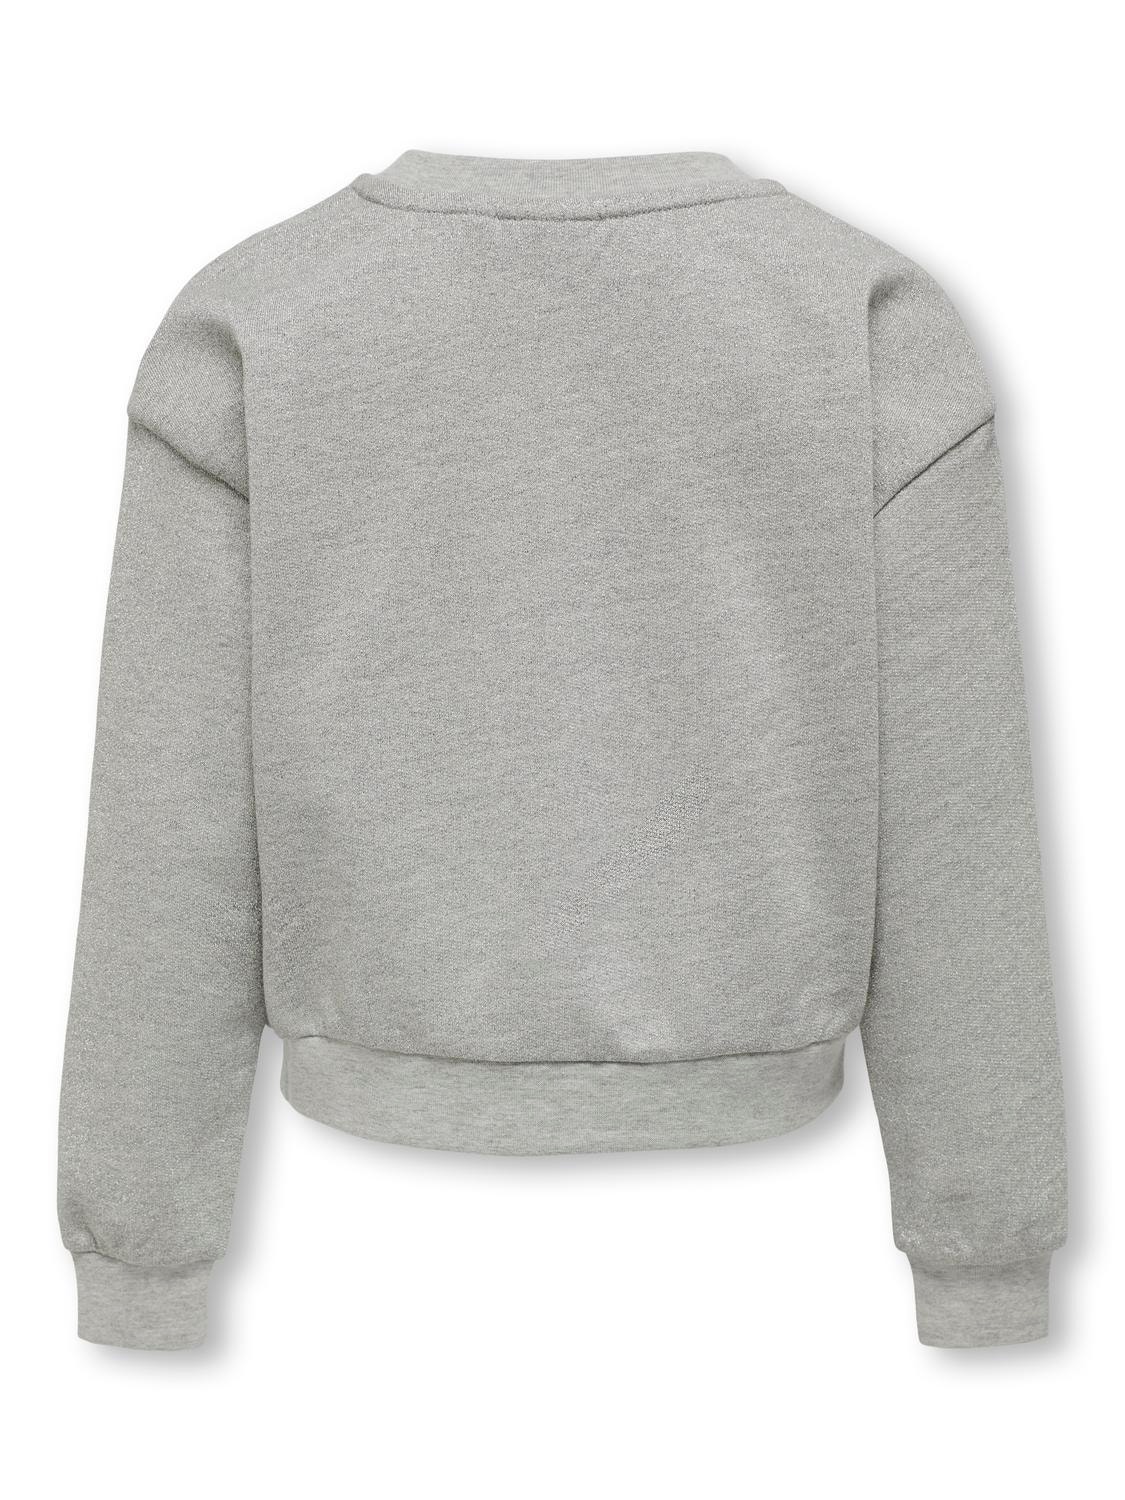 ONLY O-neck sweatshirt -Light Grey Melange - 15307459